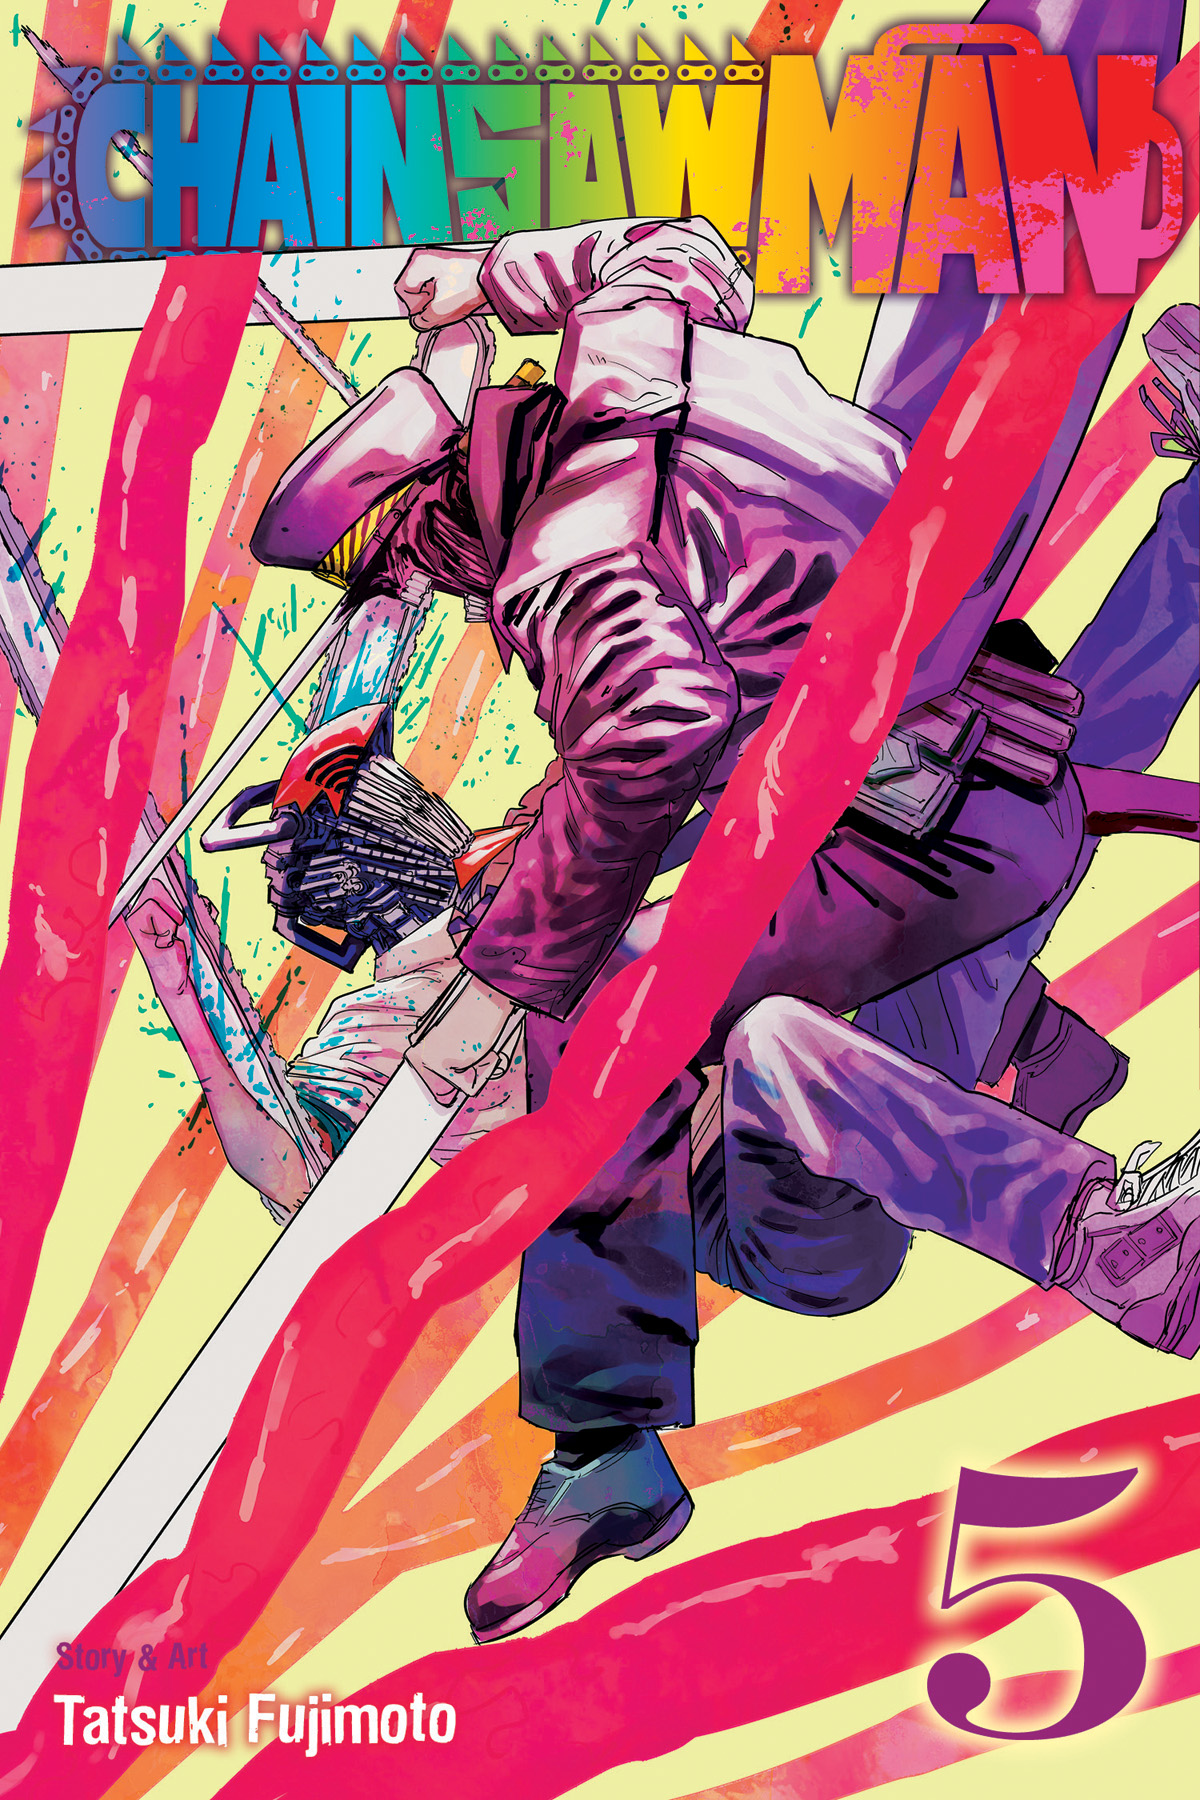 Denji takes on Katana Man on Tatsuki Fujimoto's cover to Chainsaw Man Vol. 5 (2020), Shueisha